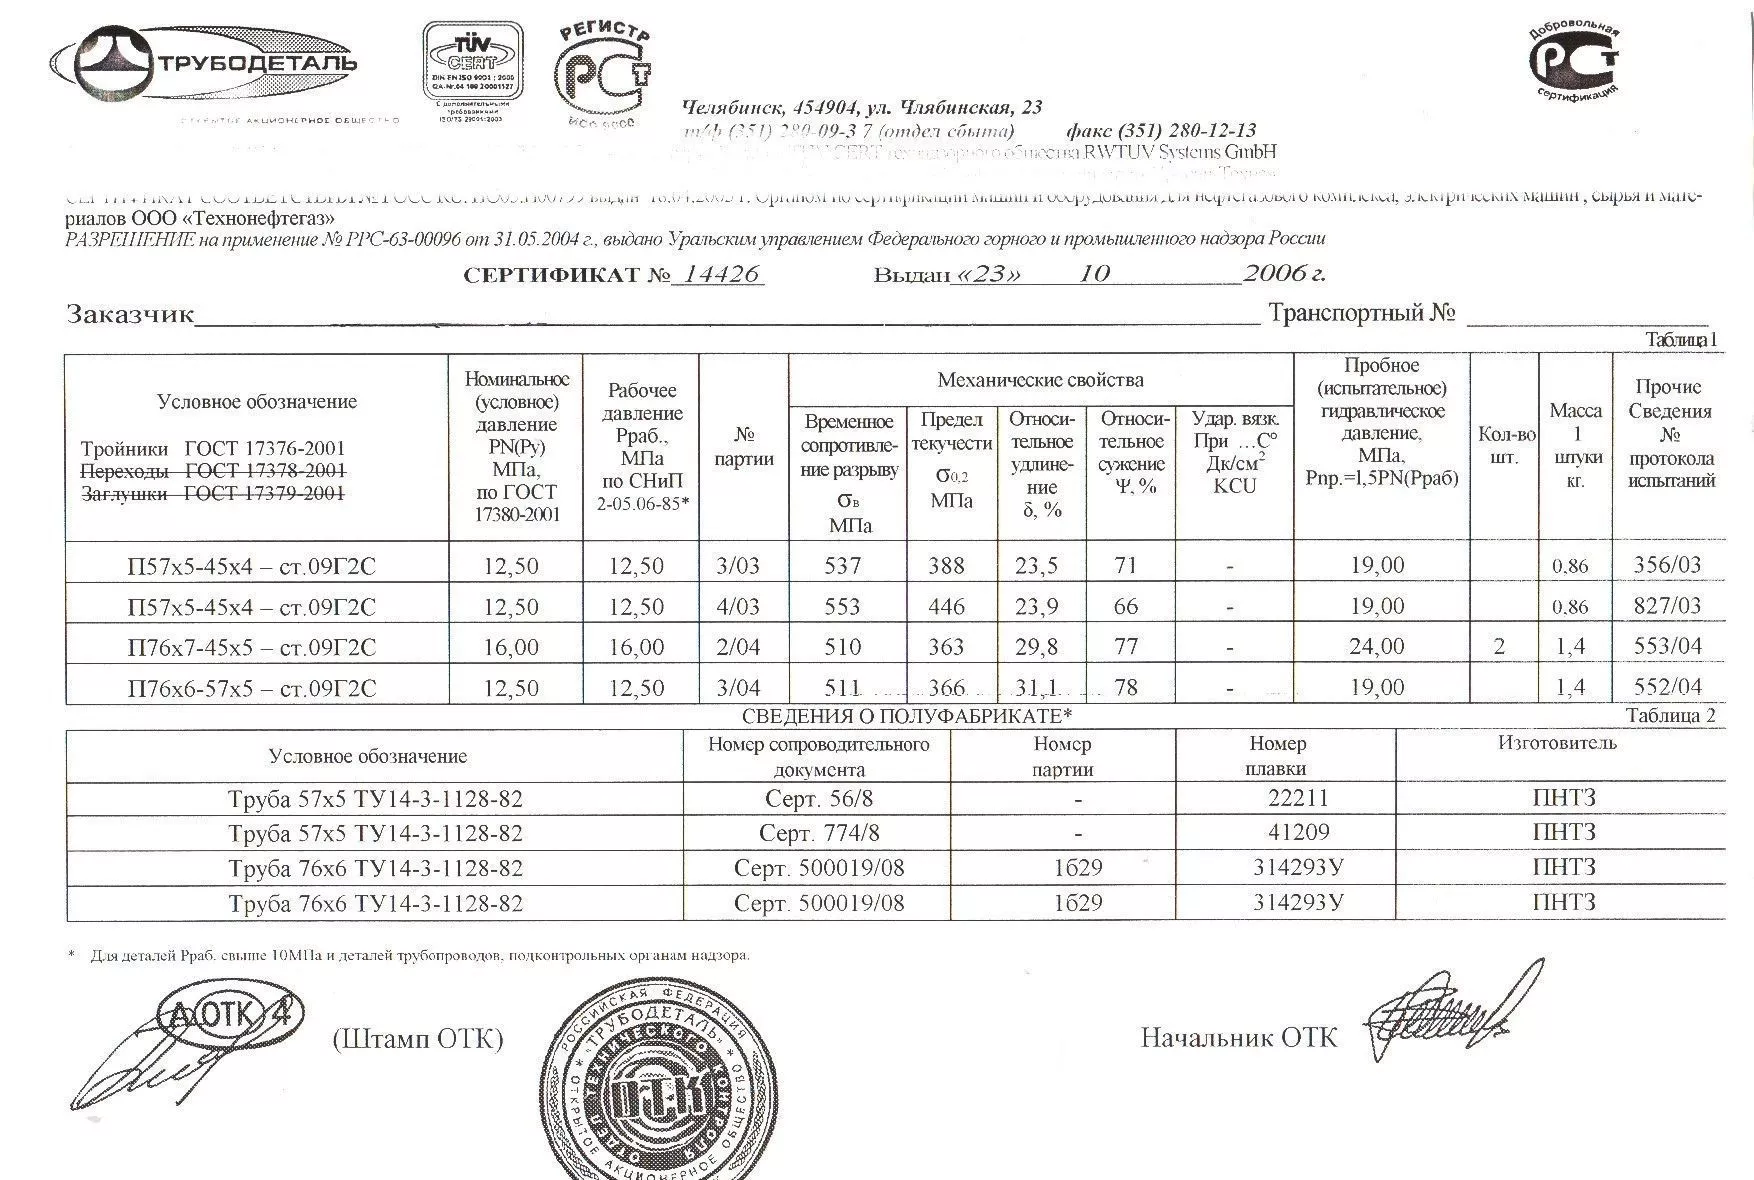 Сертификат на тройники П76х7-57х5 от 10-06